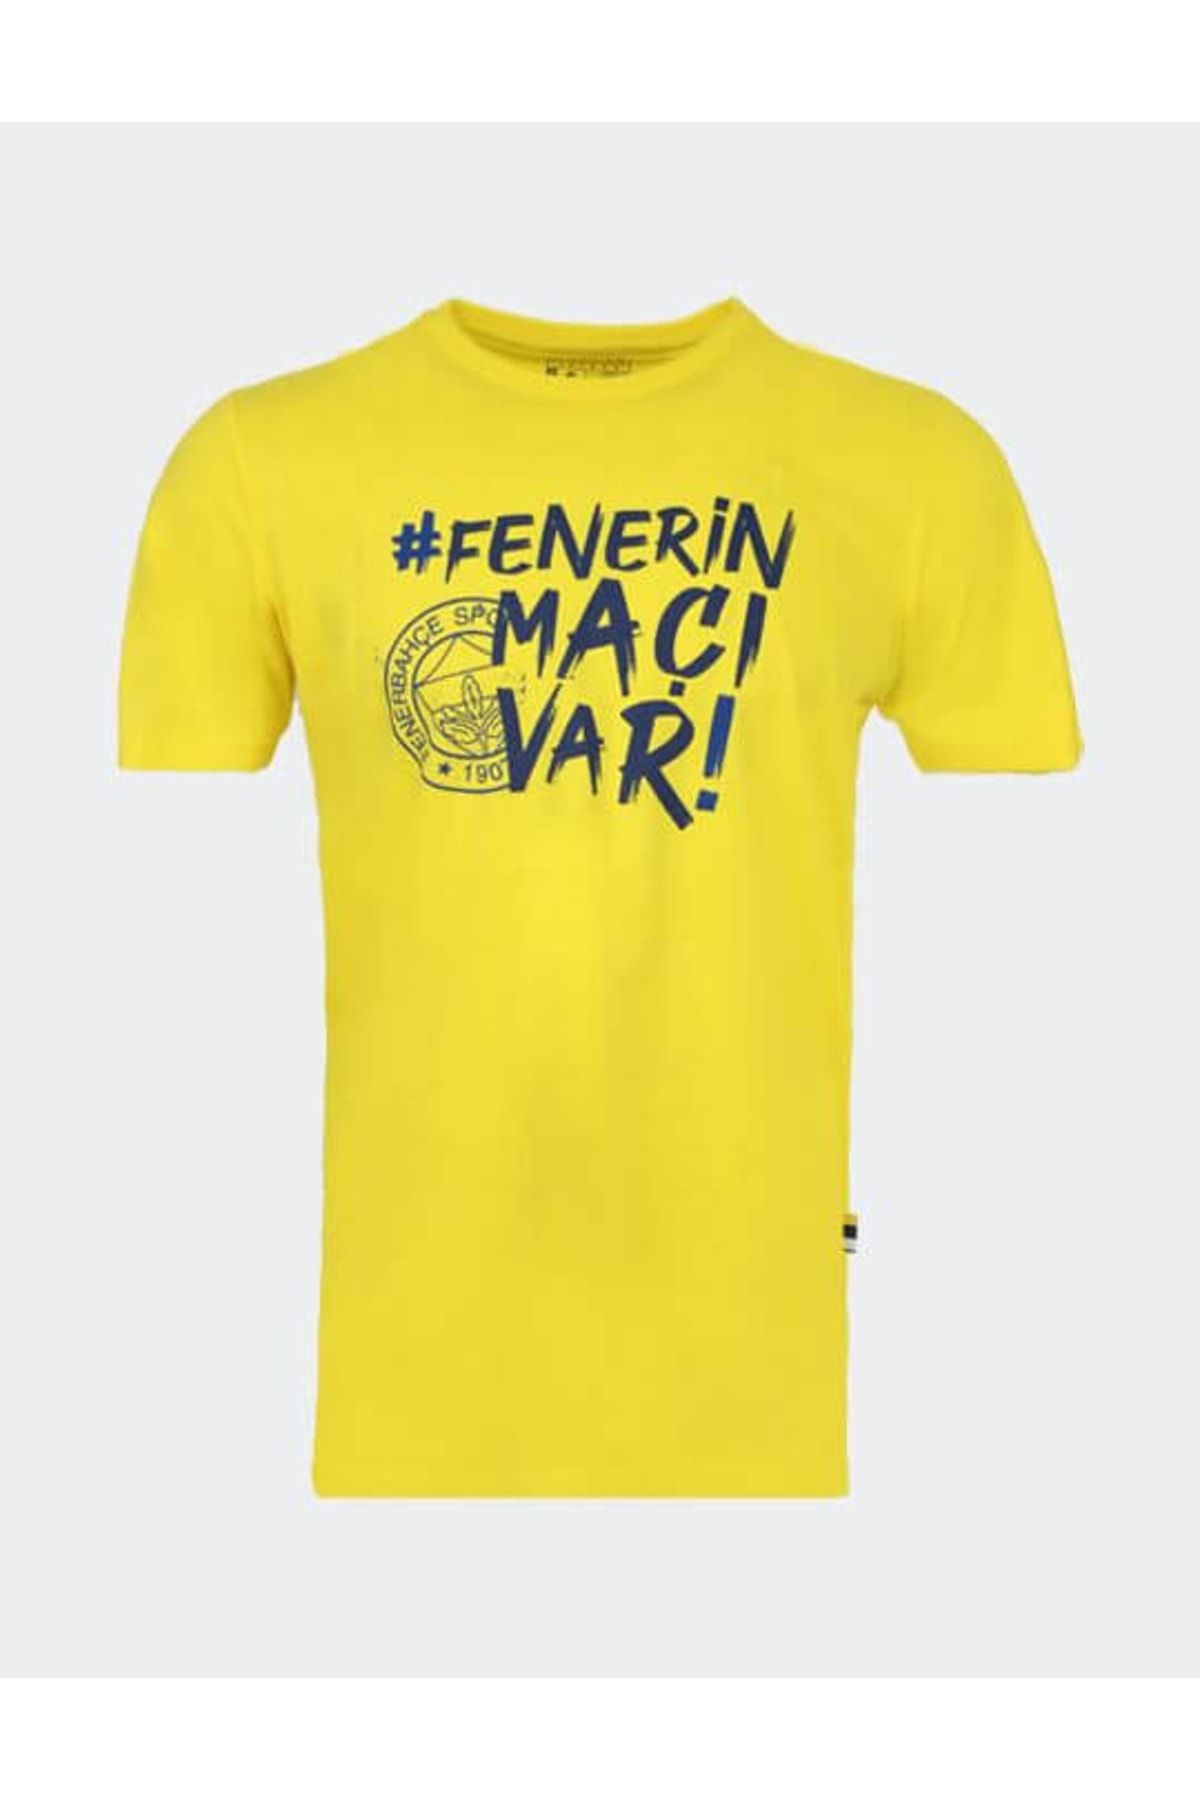 Fenerbahçe ERKEK TRIBUN MAÇ VAR TSHIRT